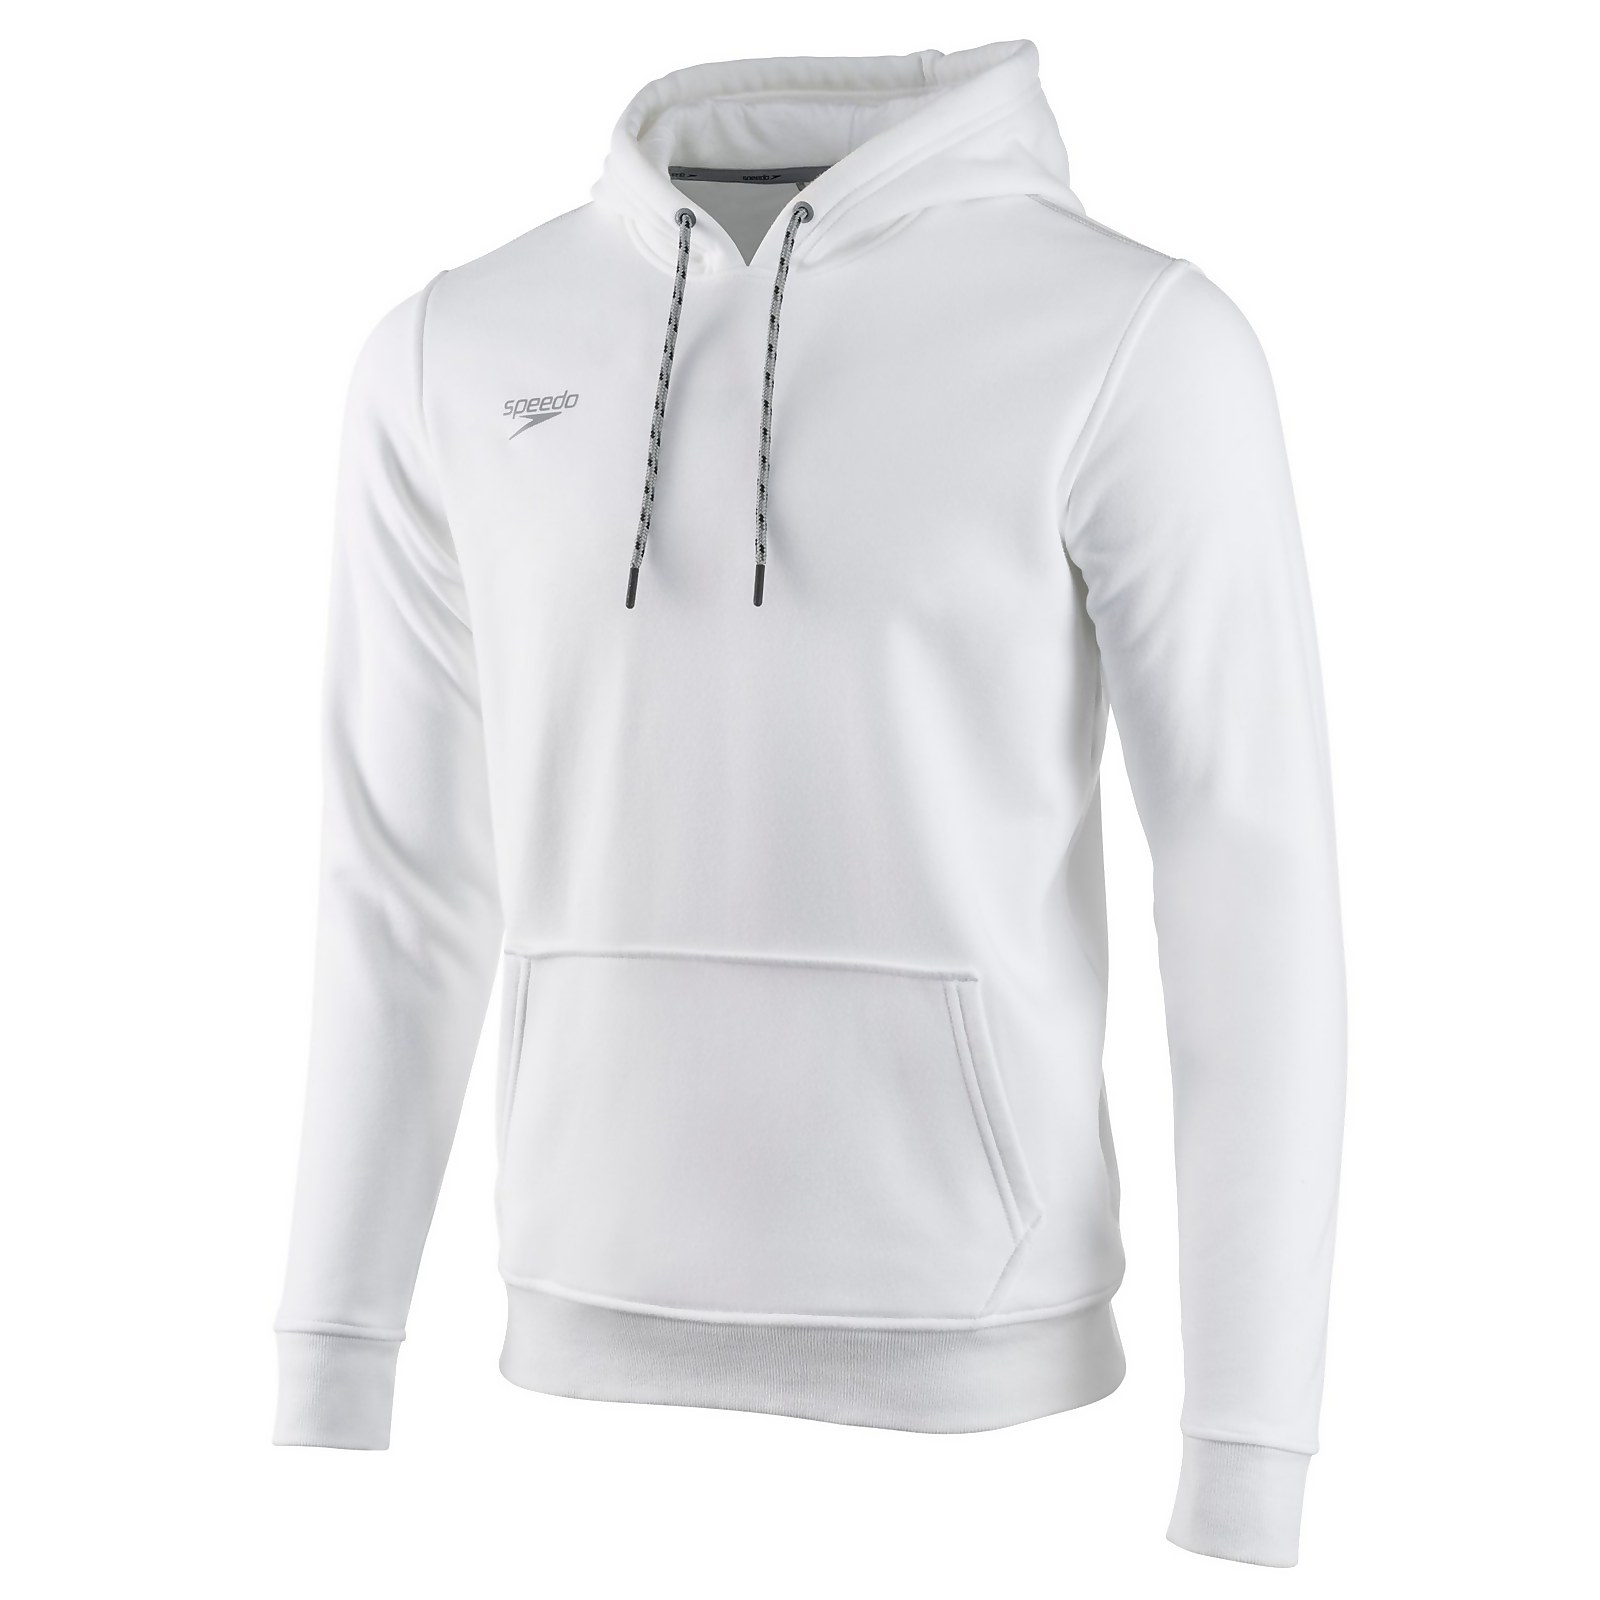 Speedo  Long Sleeve Hooded Sweatshirt - S    : White